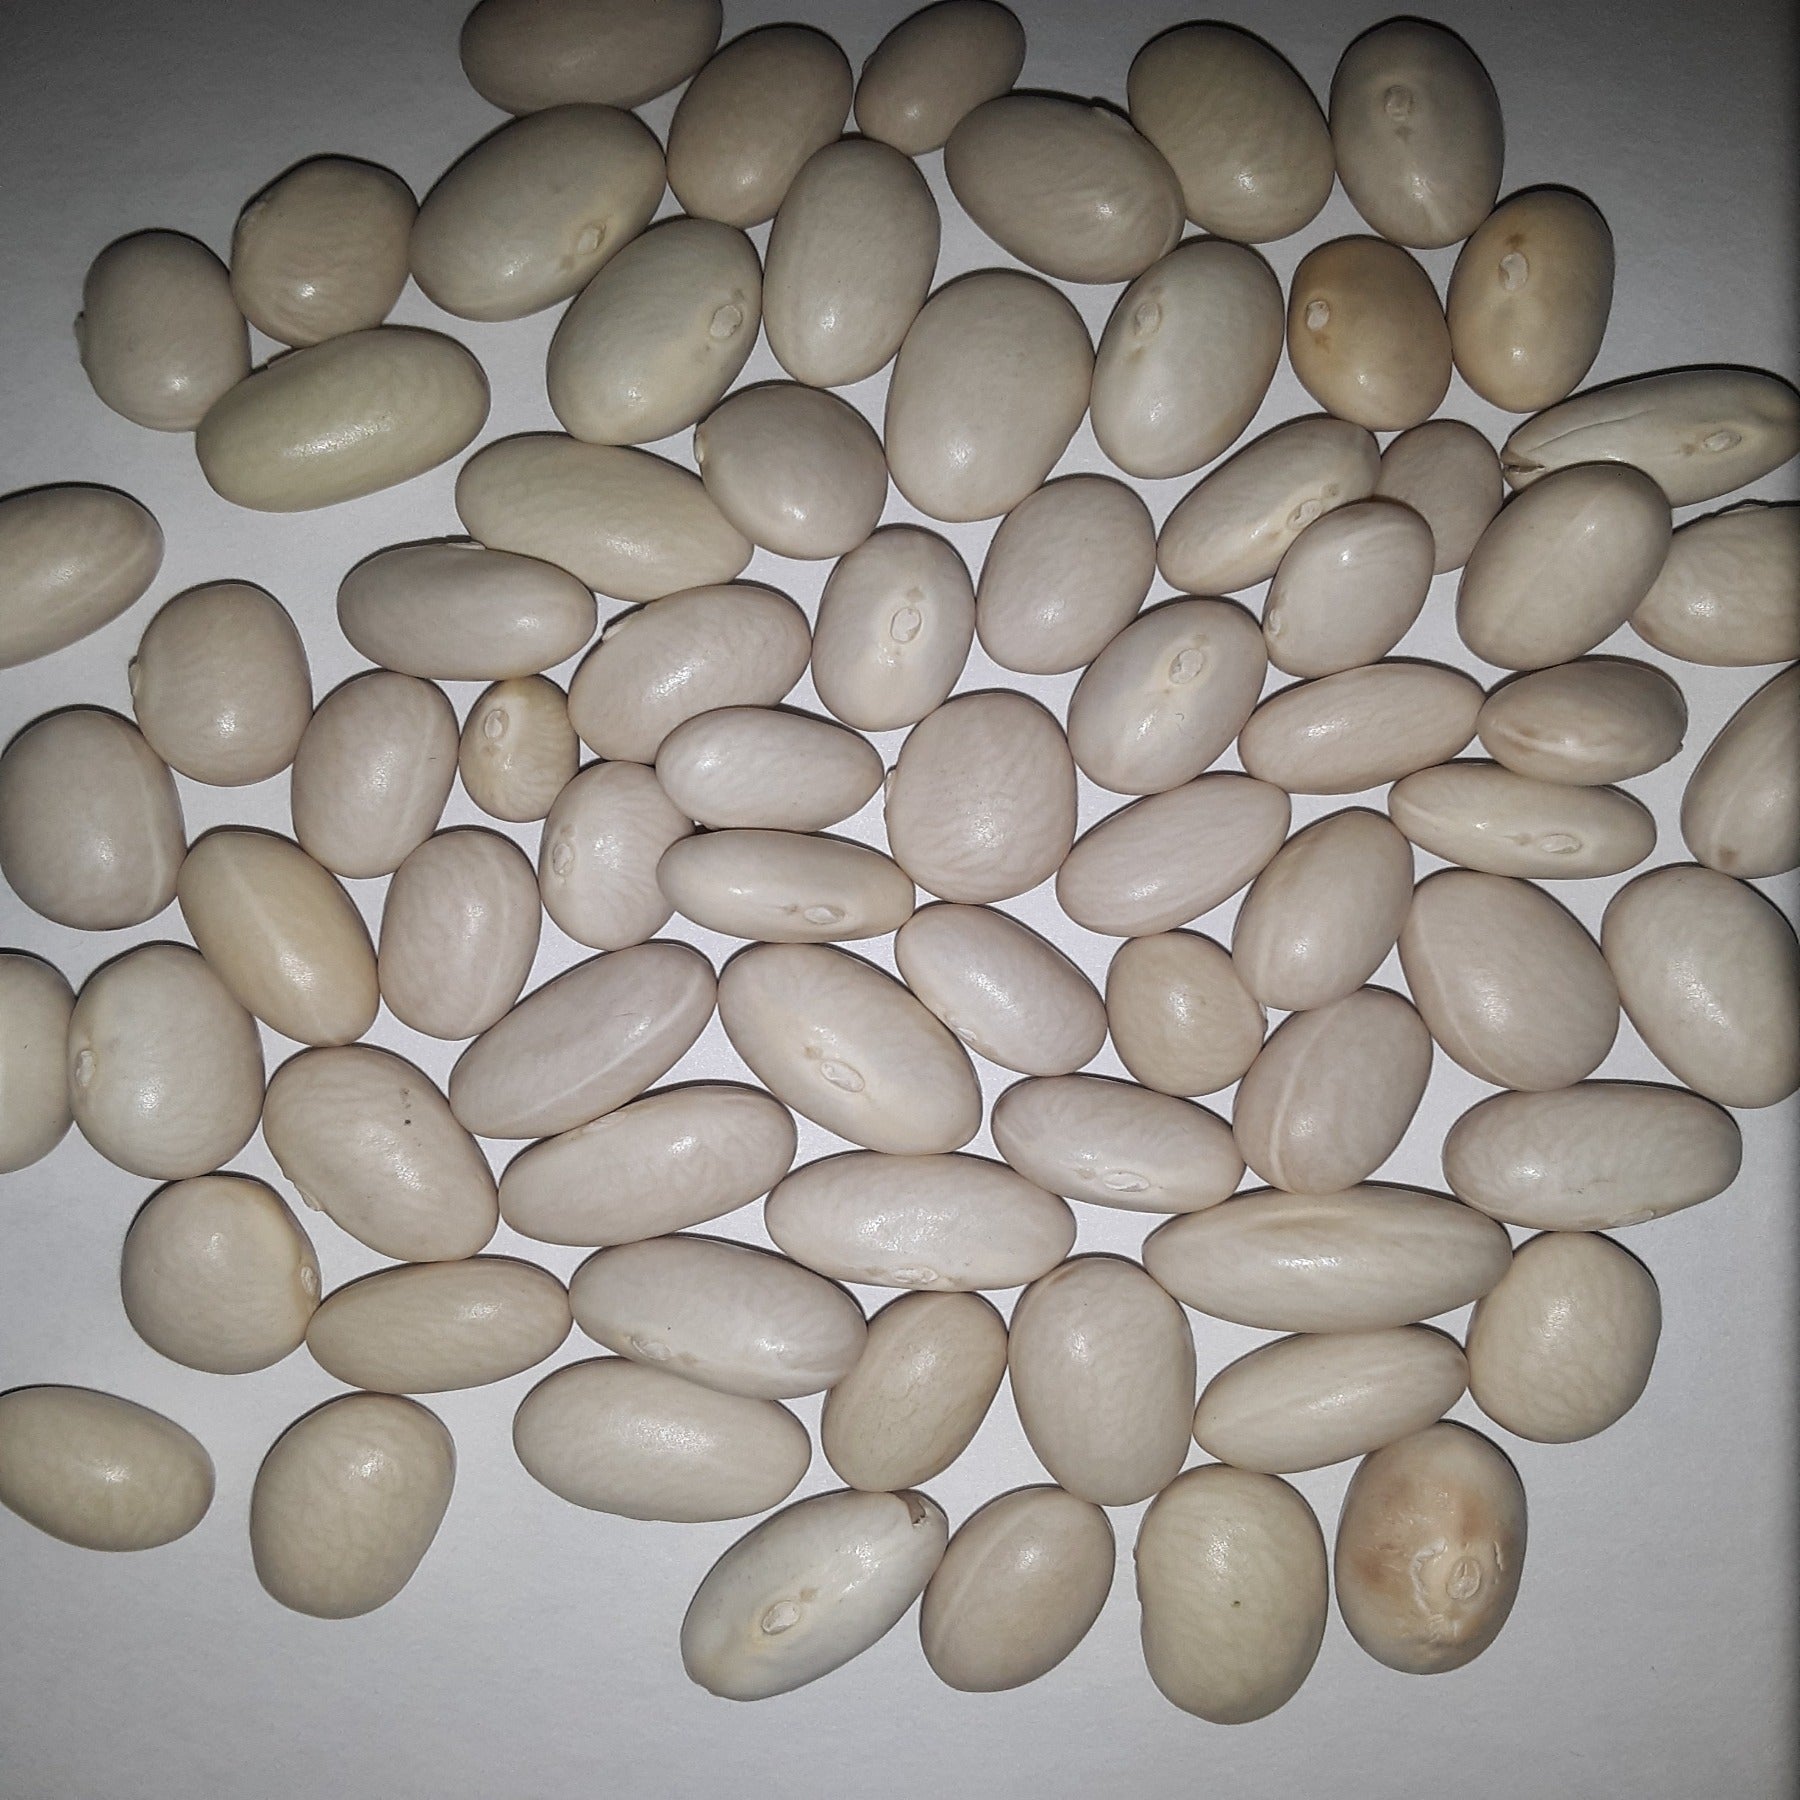 Roma II Green Bean Seeds